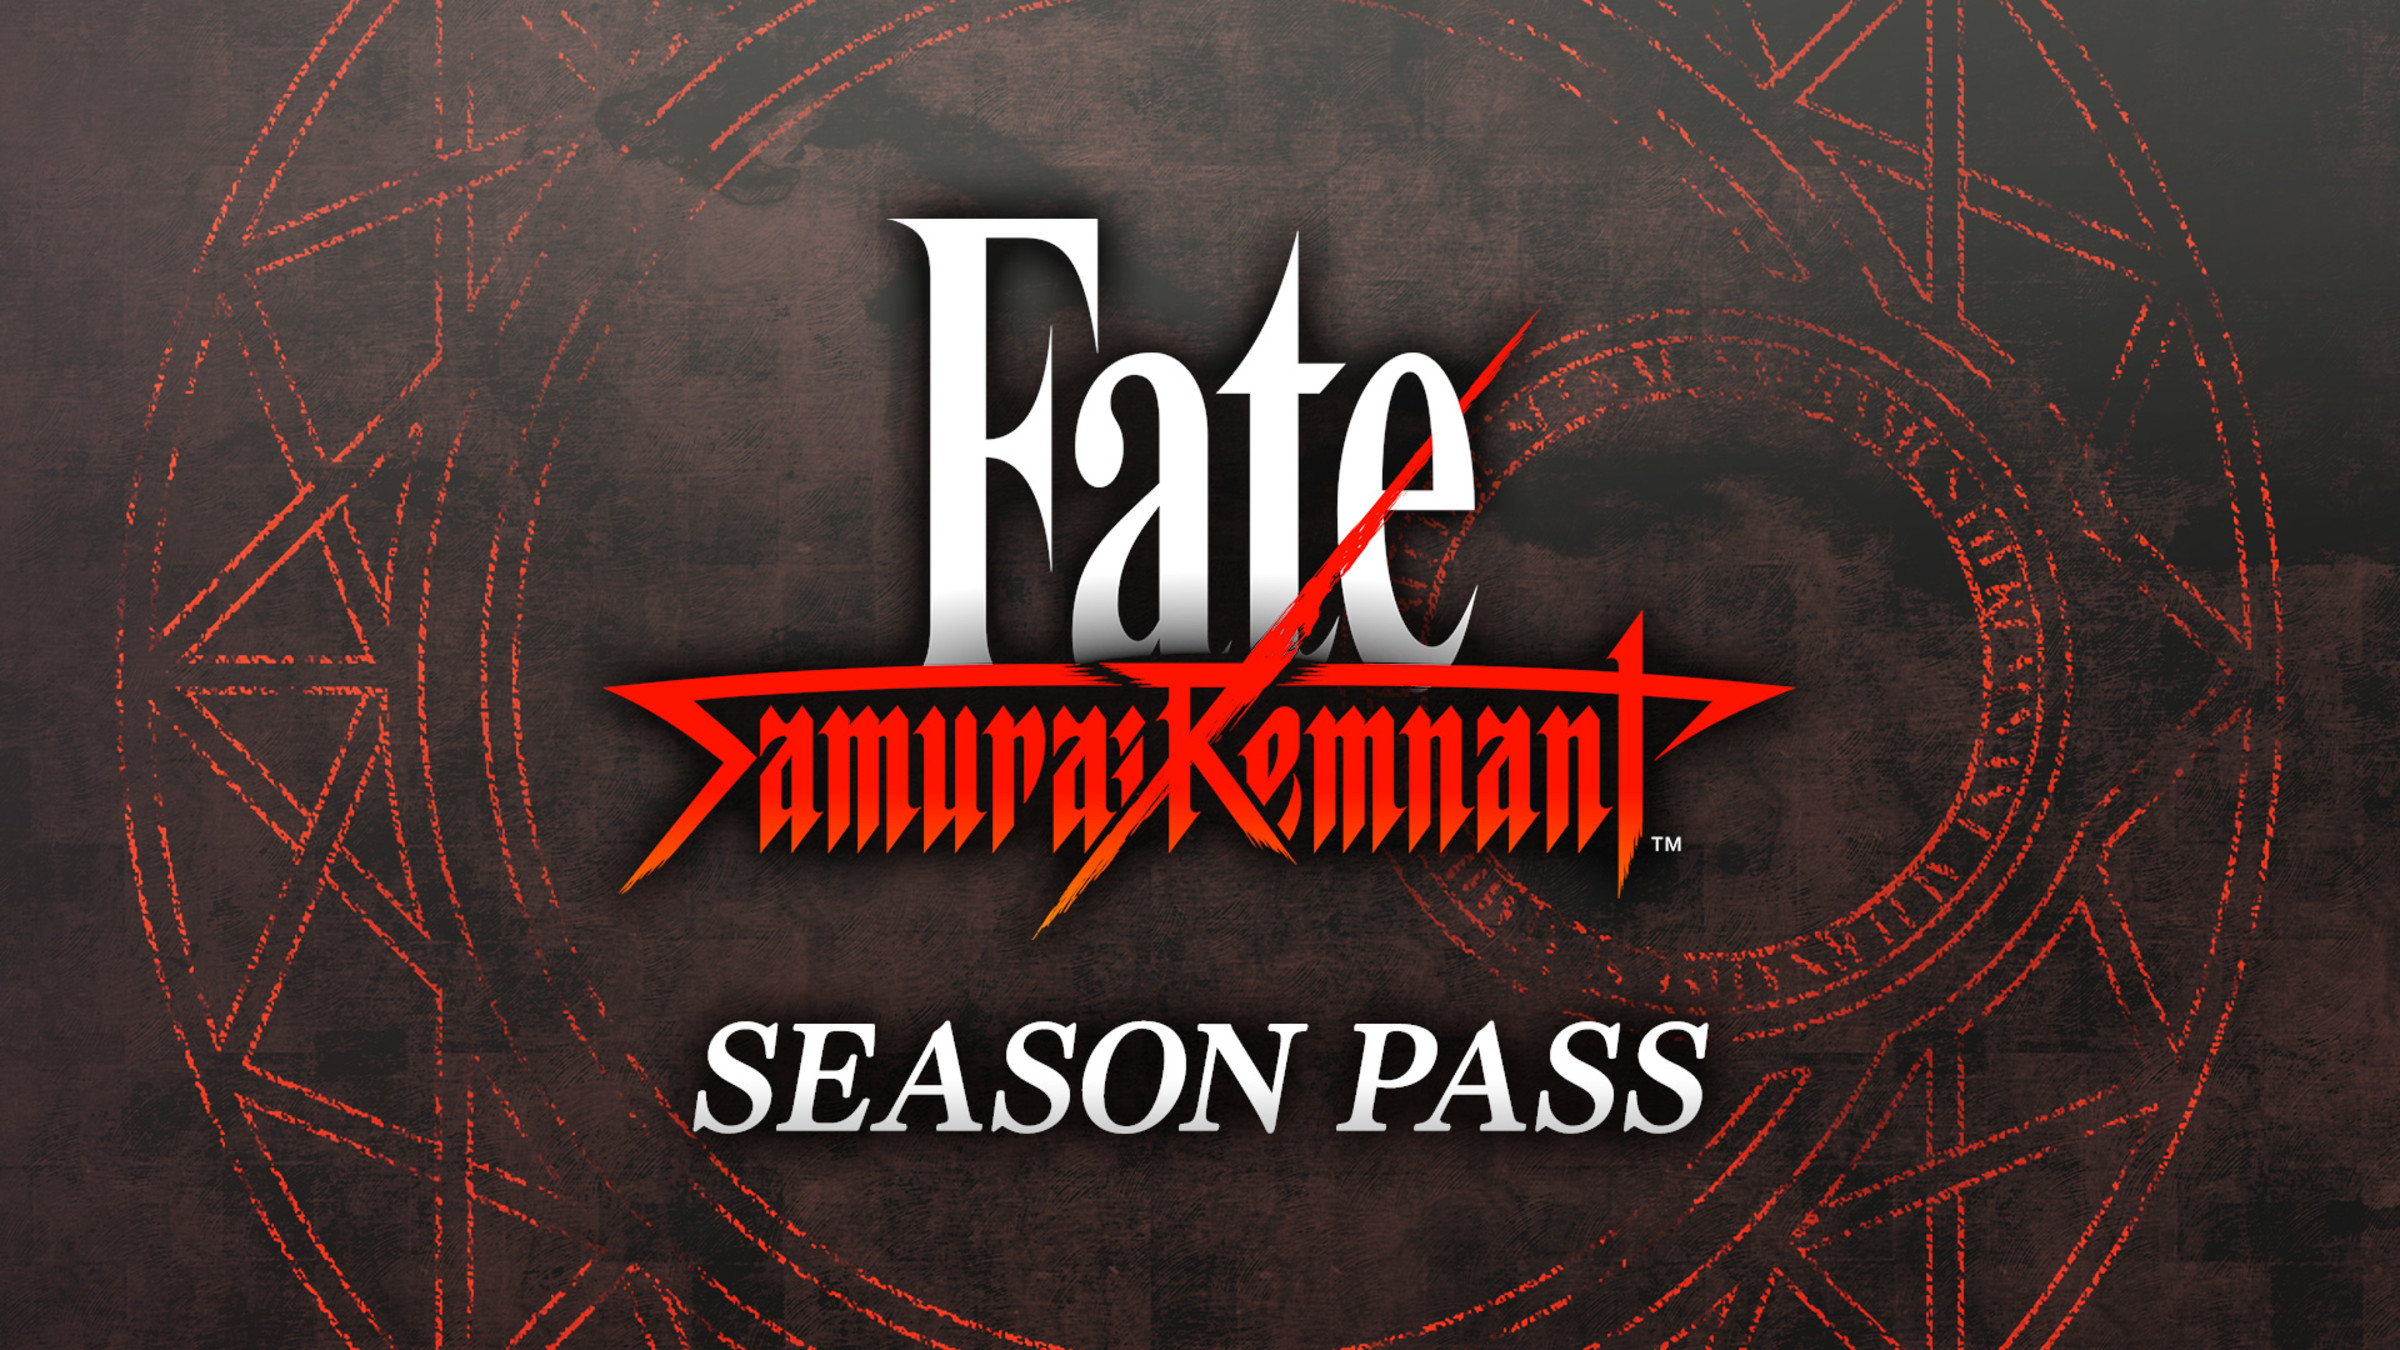 Fate/Samurai Remnant Season Pass for Nintendo Switch - Nintendo 